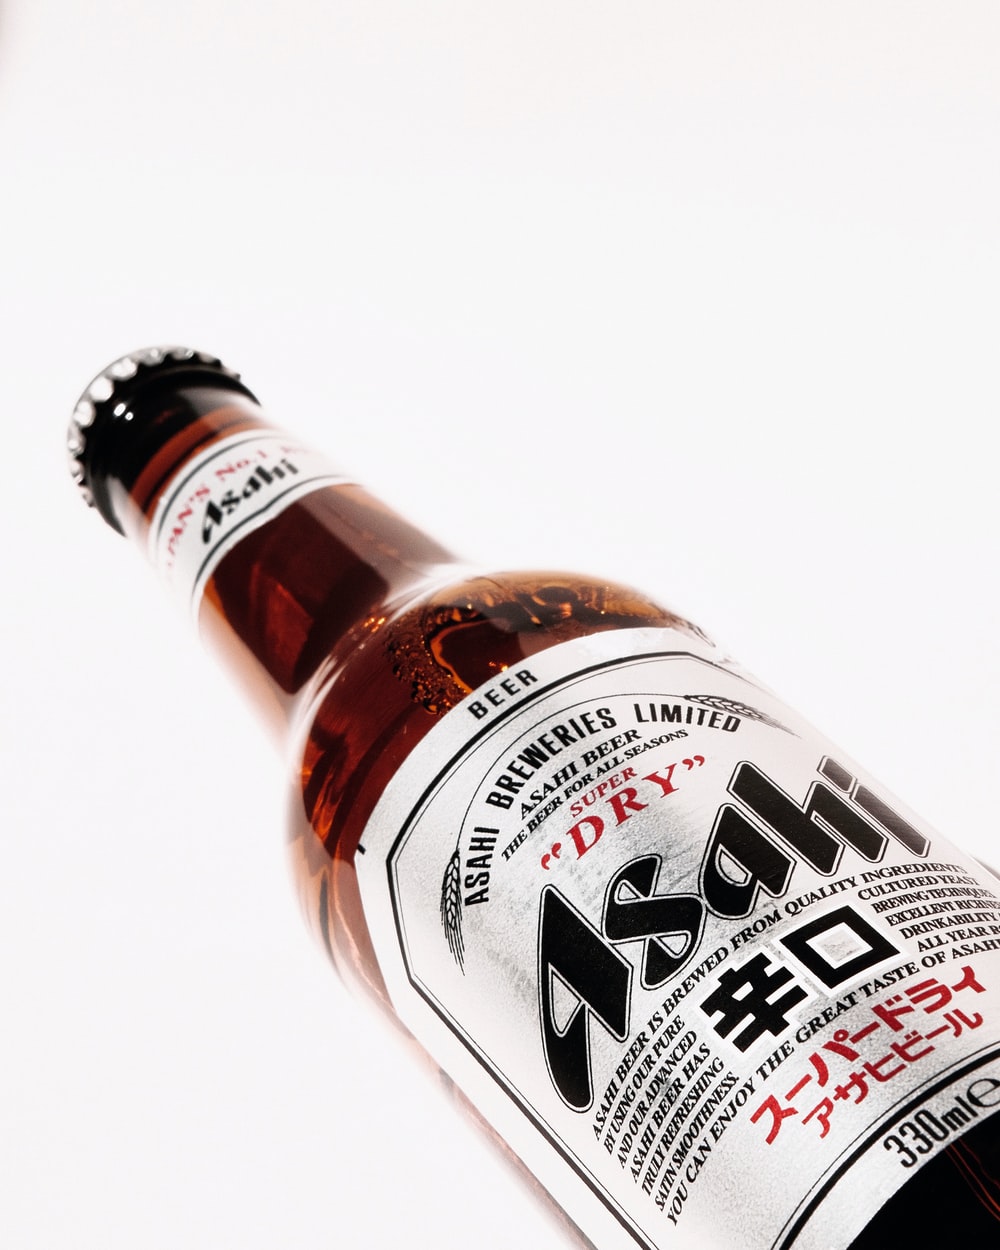 Asahi Beer Wallpapers